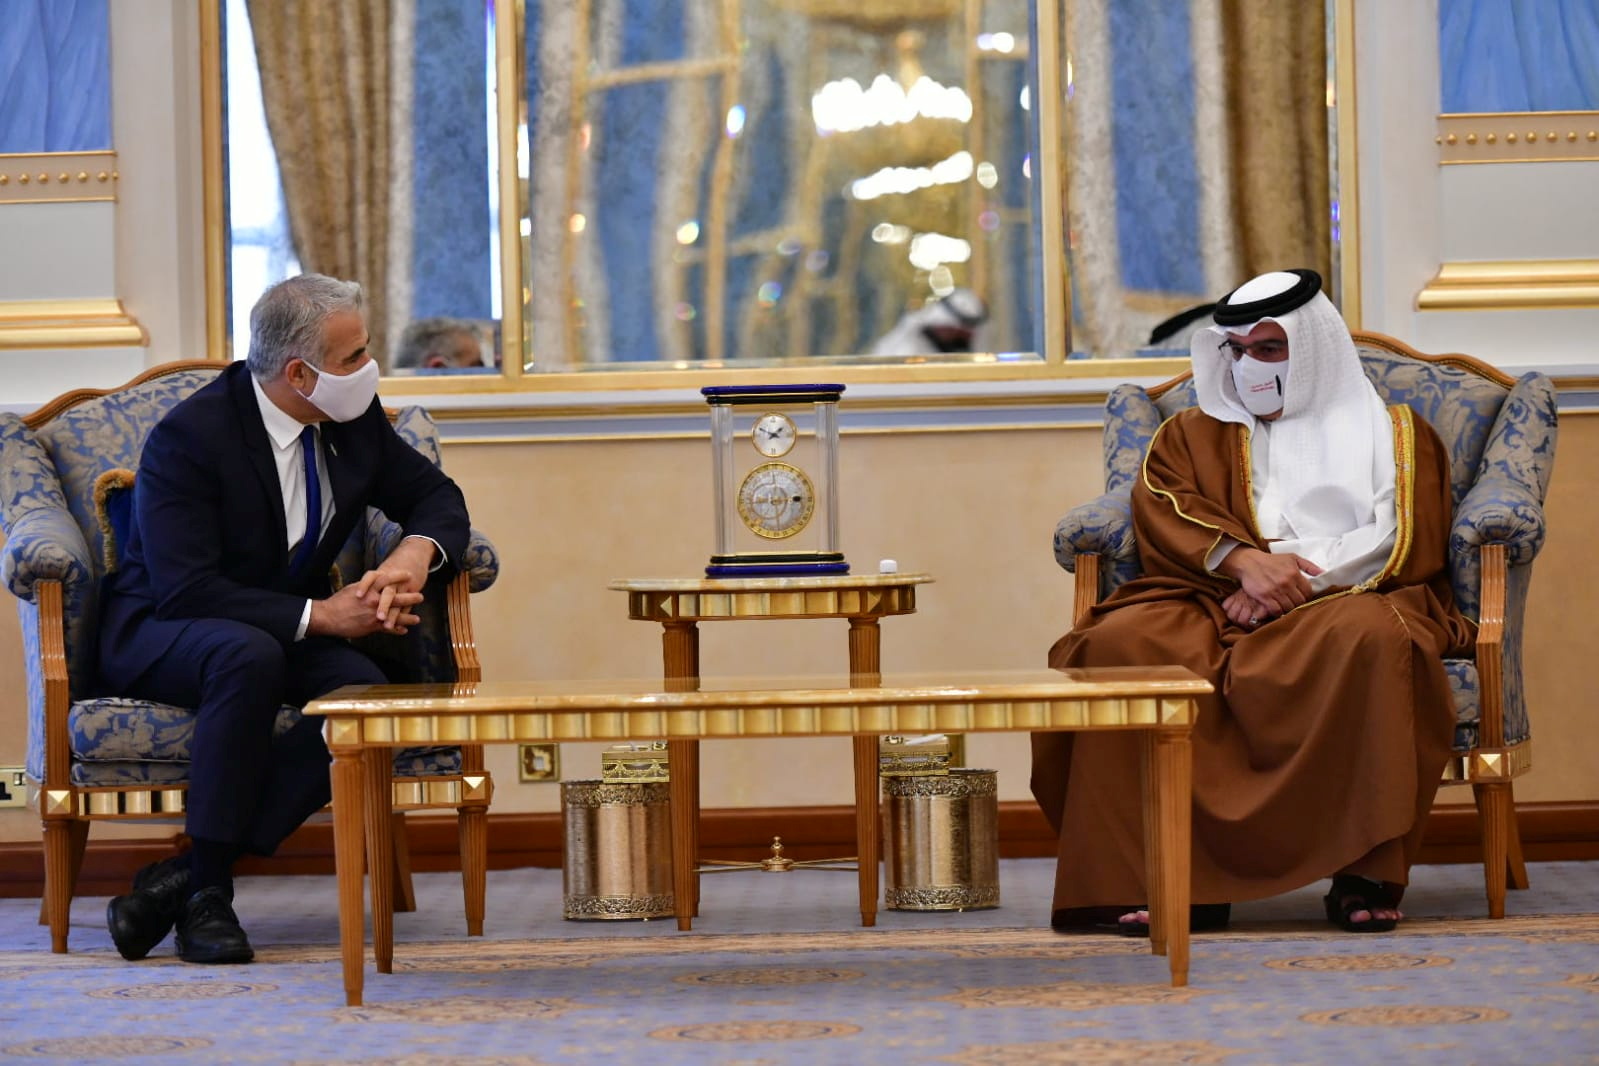 Israeli Foreign Minister Yair Lapid meets with Bahrain's Crown Prince Salman bin Hamad Al Khalifa in Manama